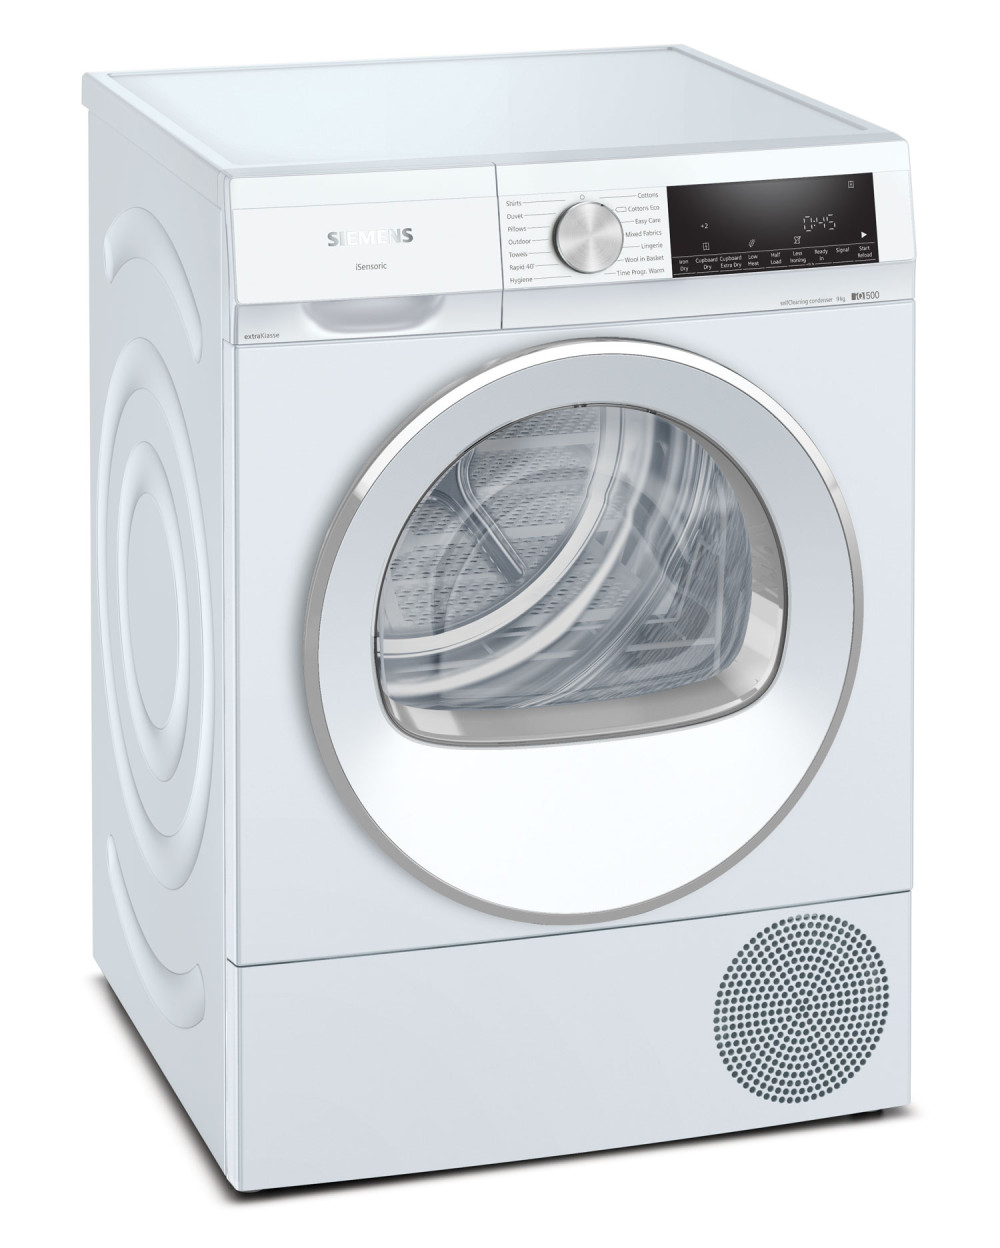 Siemens WQ45G2D9GB iQ500 9kg Heat Pump Tumble Dryer featured image